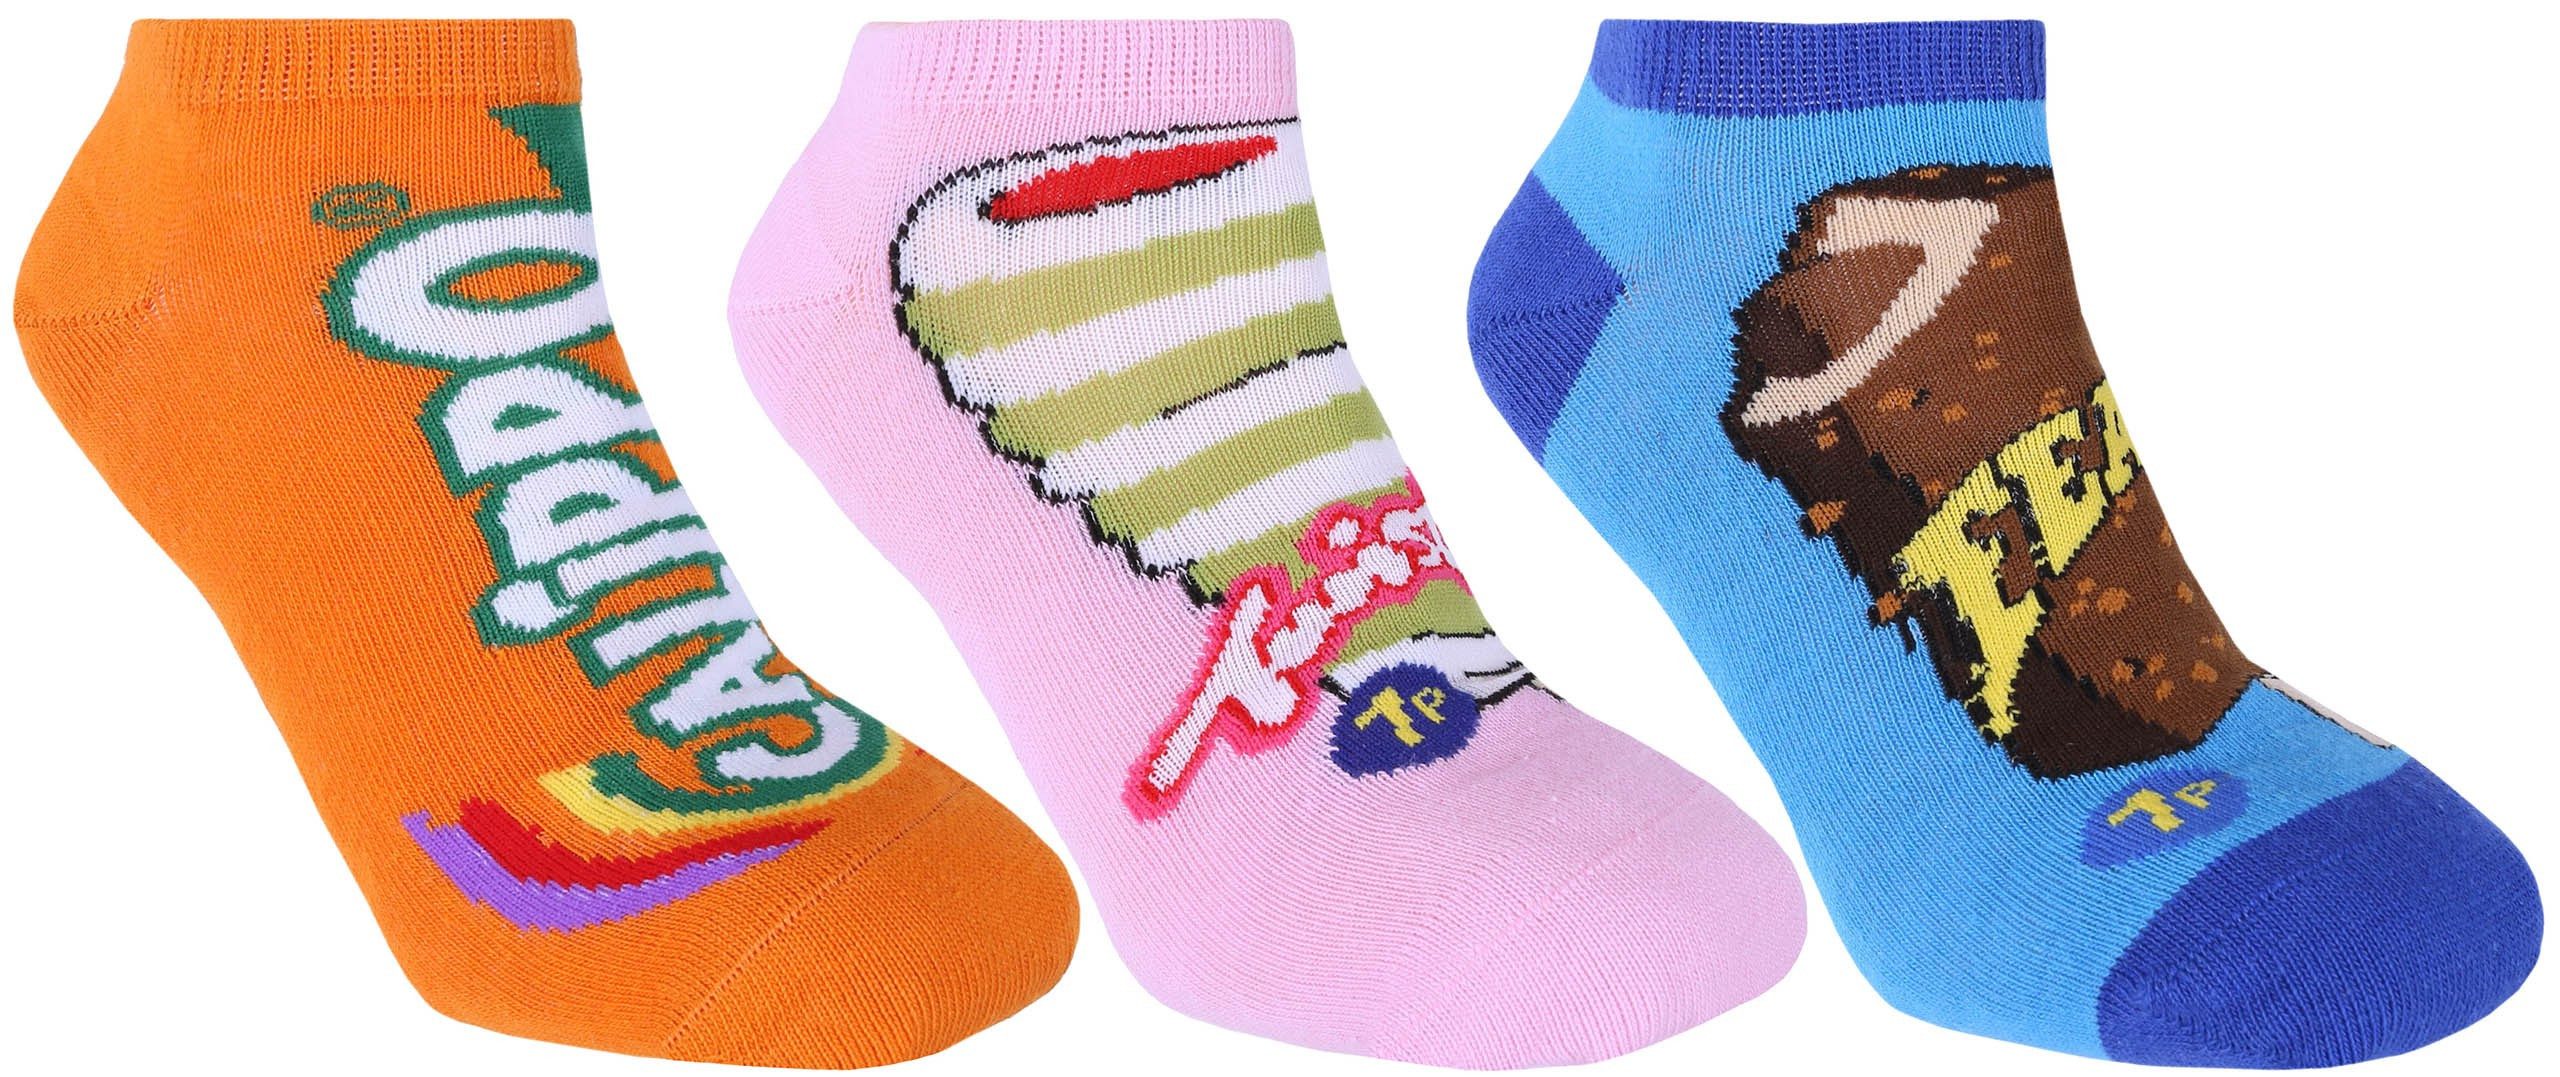 Sarcia.eu Haussocken 3 x Bunte Socken, Füßlinge mit dem Walls-Eis-Motiv 37-42 EU